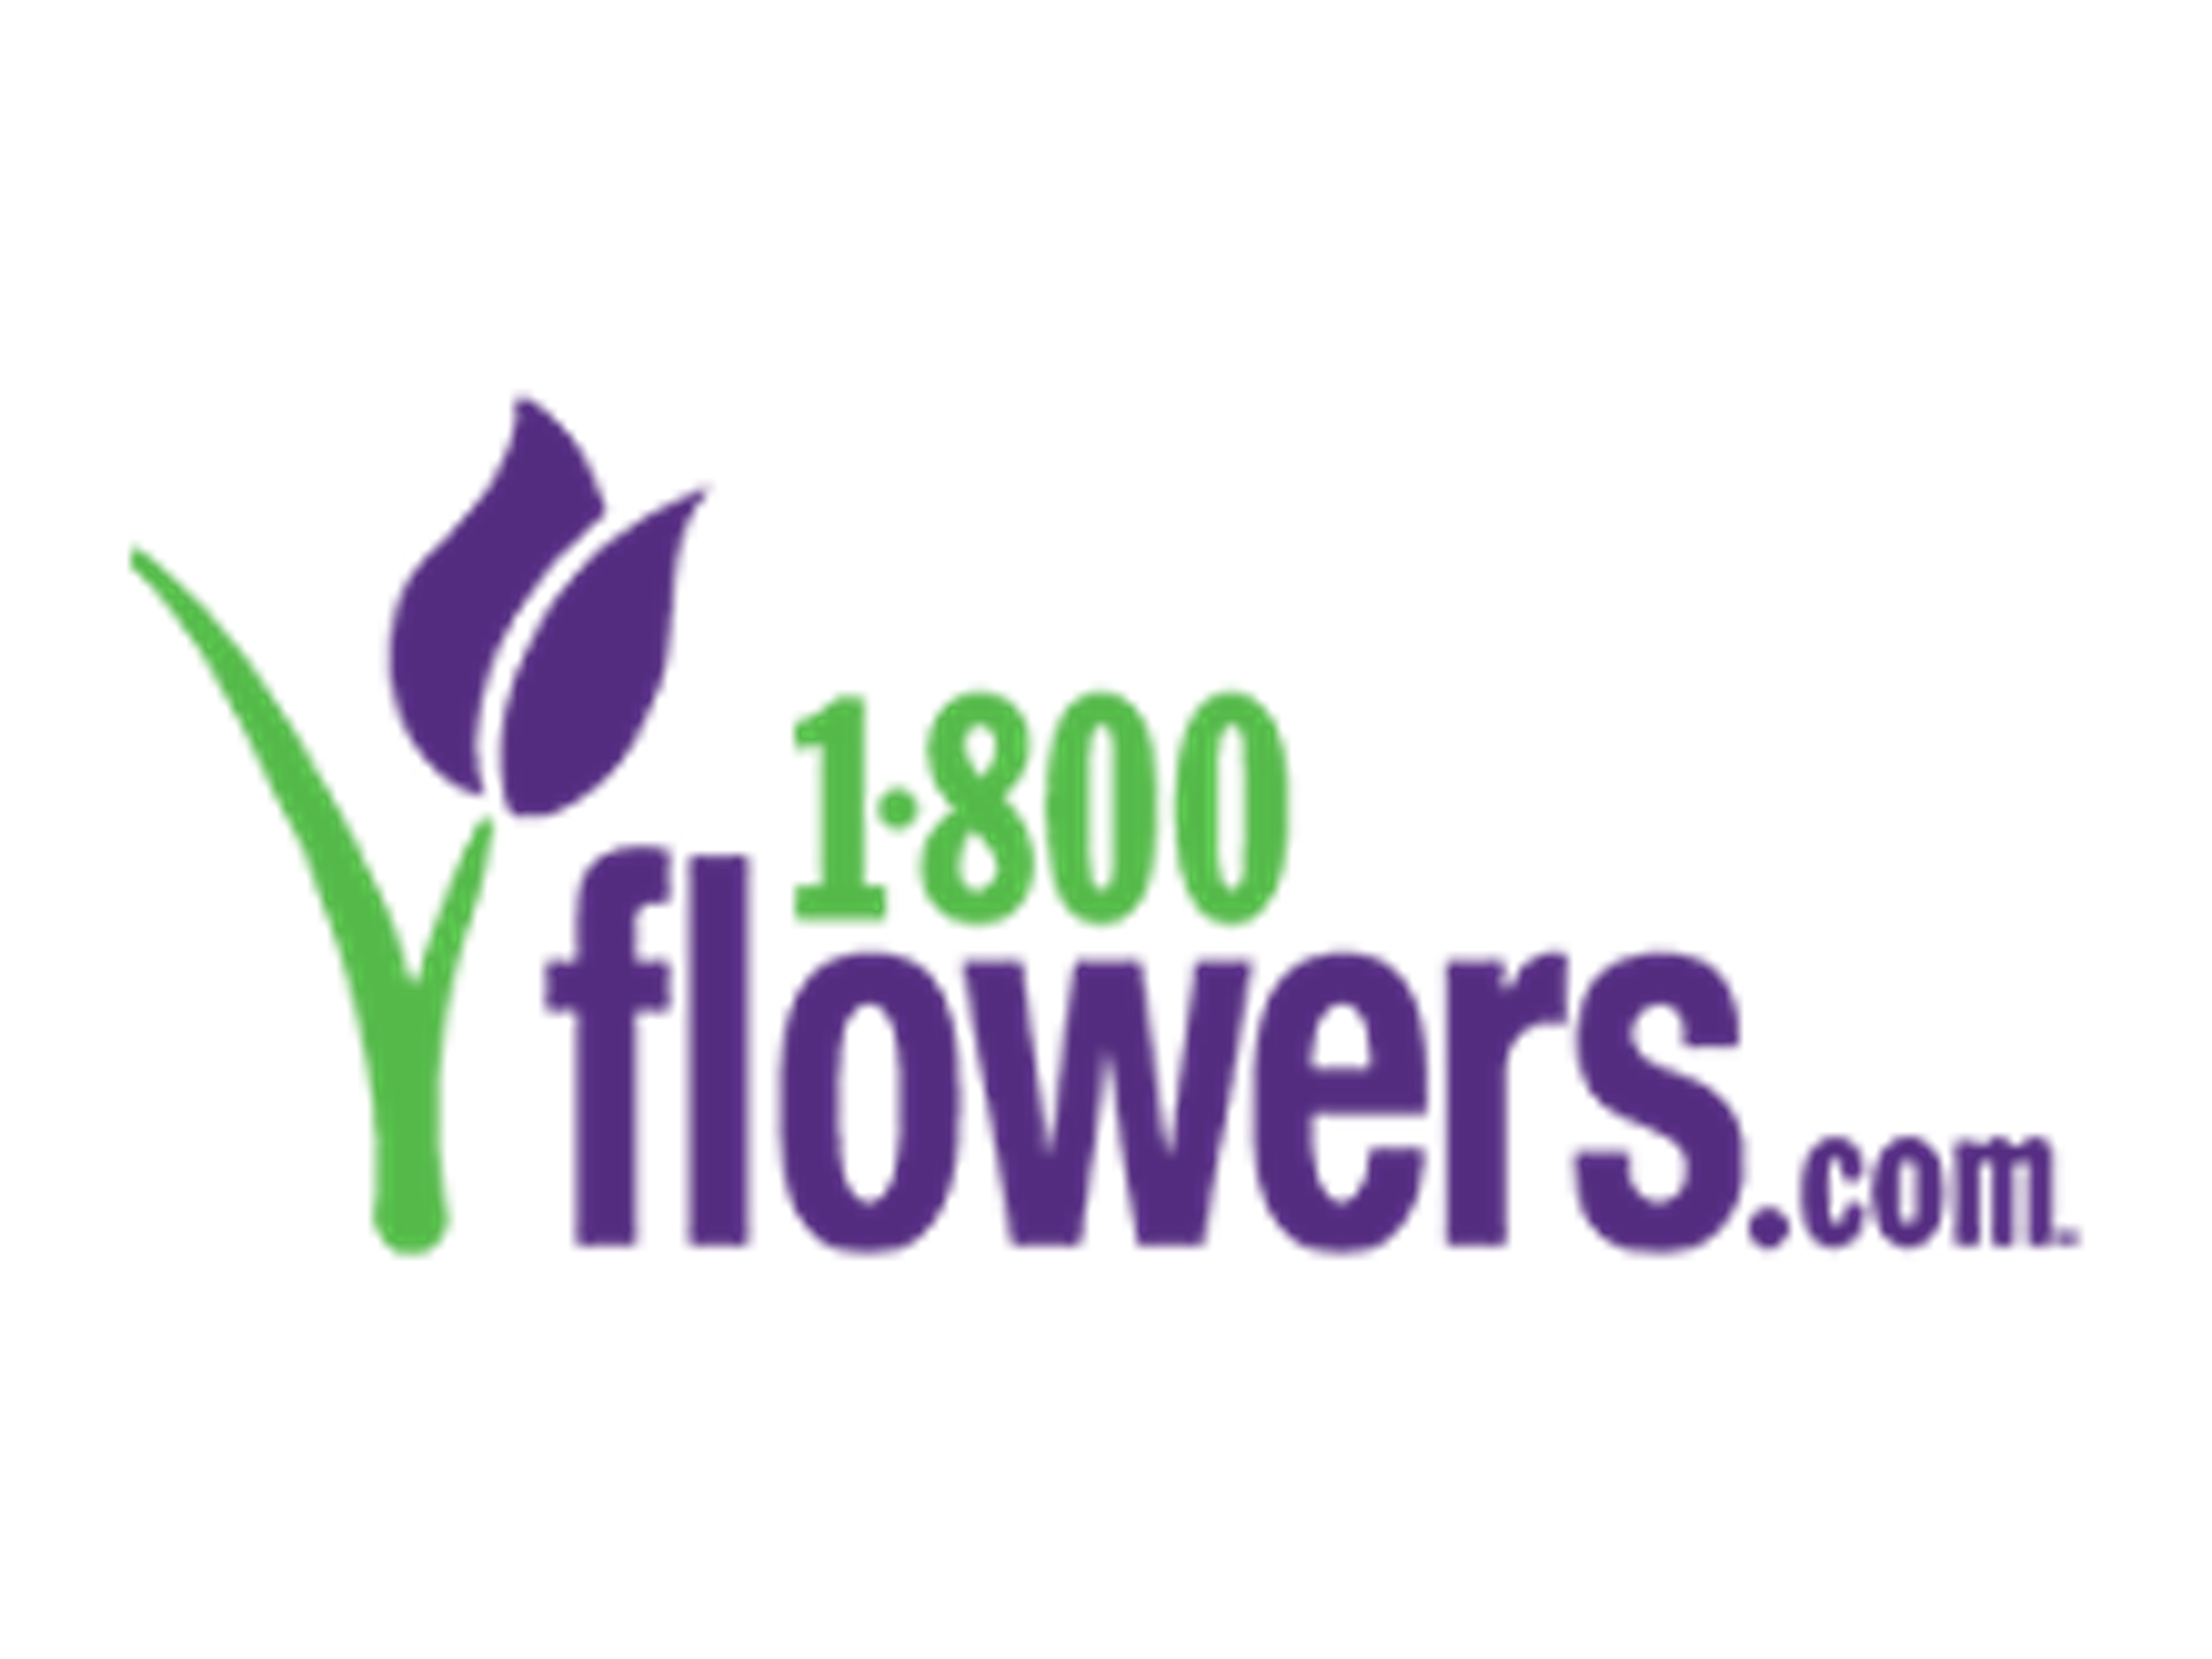 1-800-FLOWERS logo SF LP.png